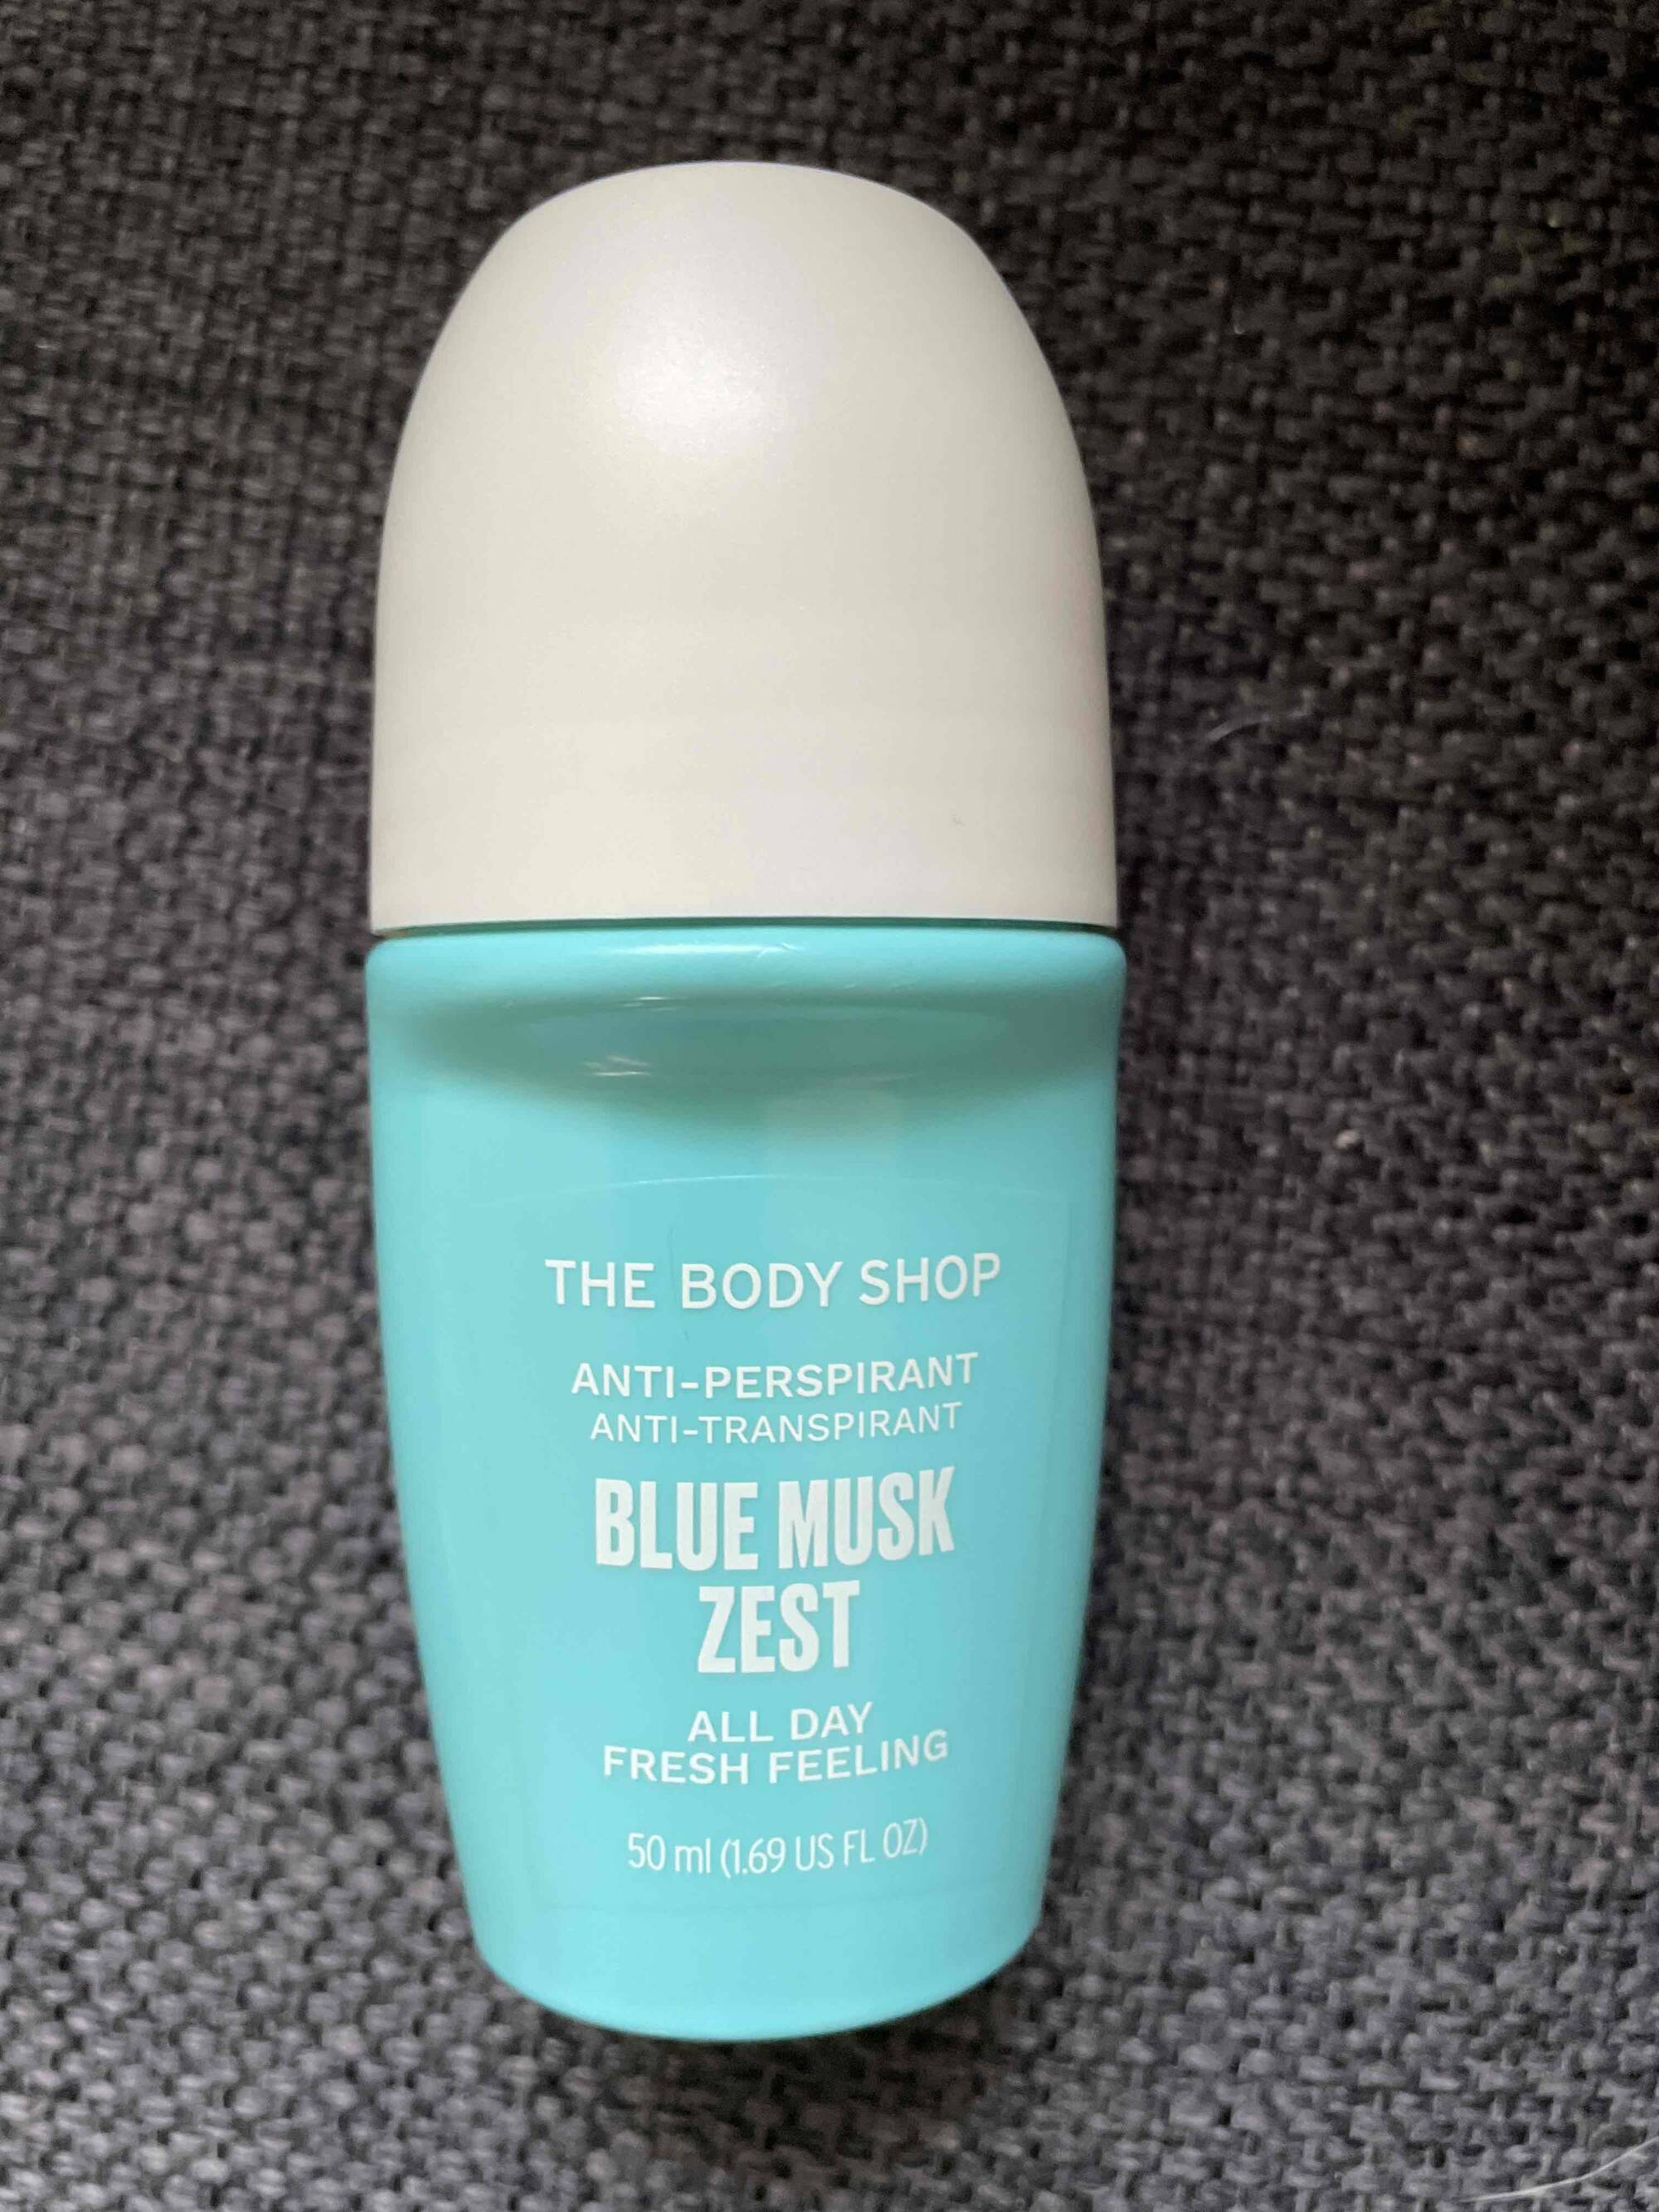 THE BODY SHOP - Blue musk zest - Anti-transpirant